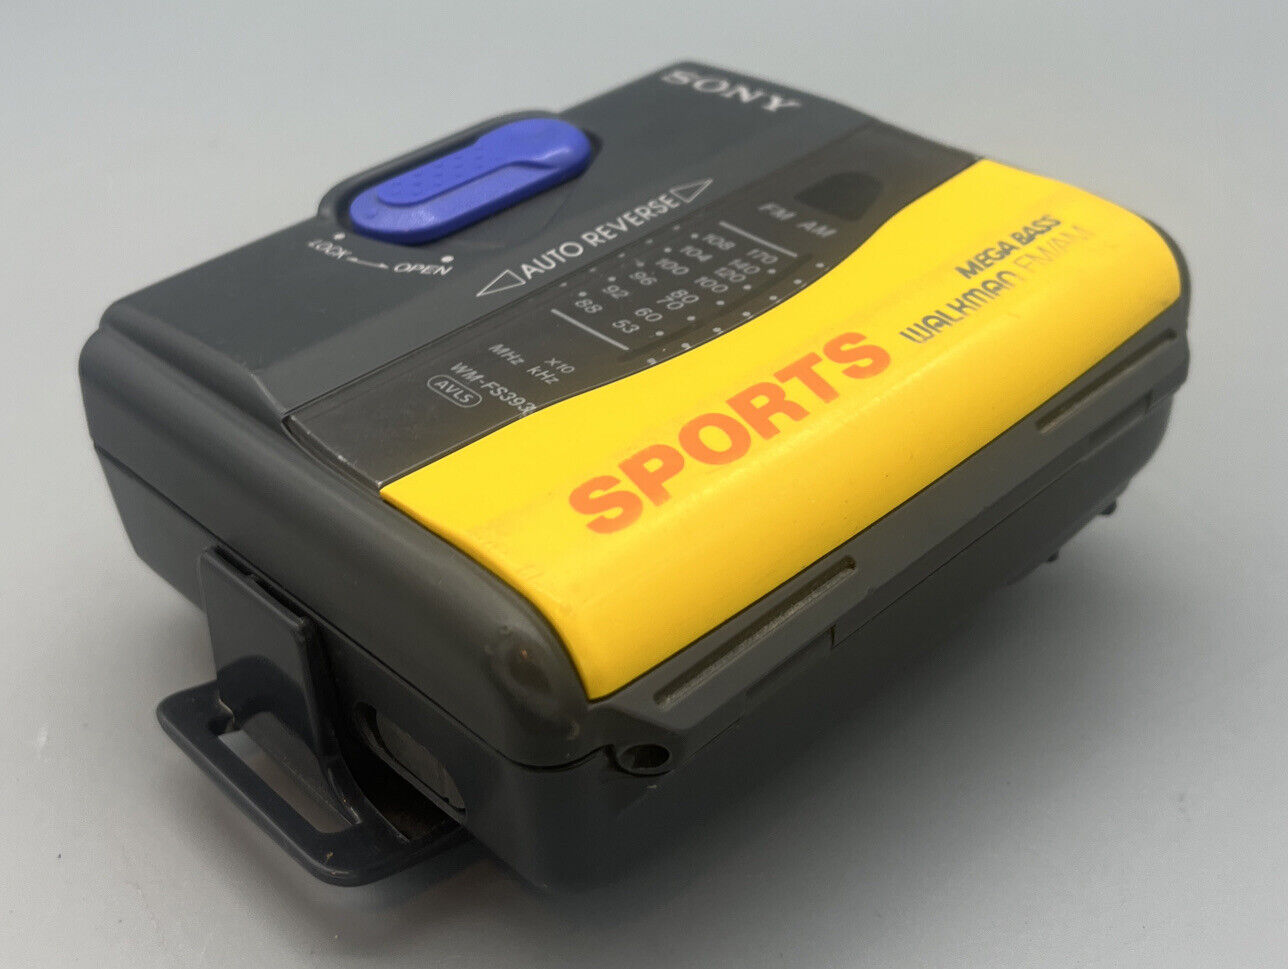 Sony+Sports+Walkman+Cassette+80s+Yellow+Wm-fs393+Working+Tested+ 